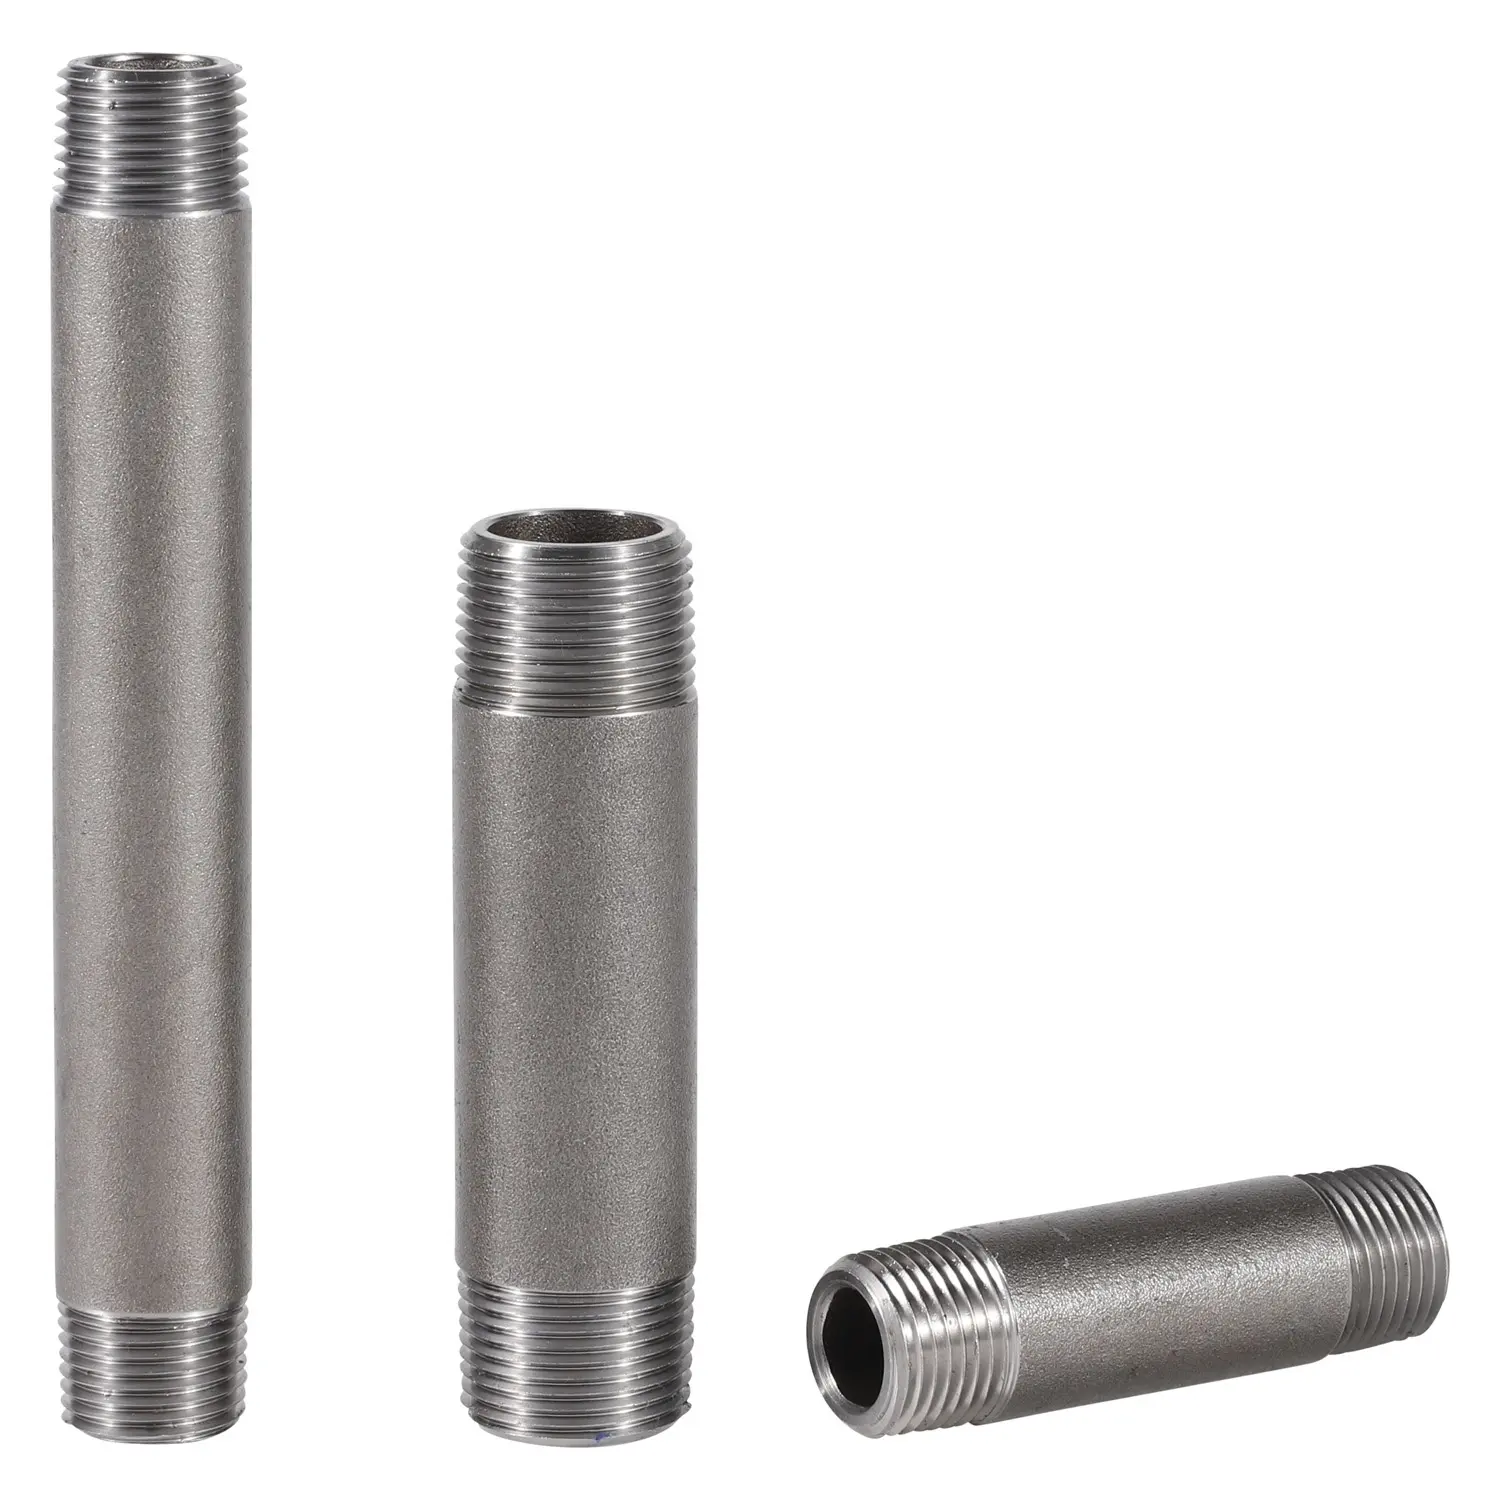 NPT male steel pipe nipple straight ASTM A733 ASTM A106 gr B 3/4" close thread end ASME B1.20.1 NPT length 102mm (4 "); sch 80